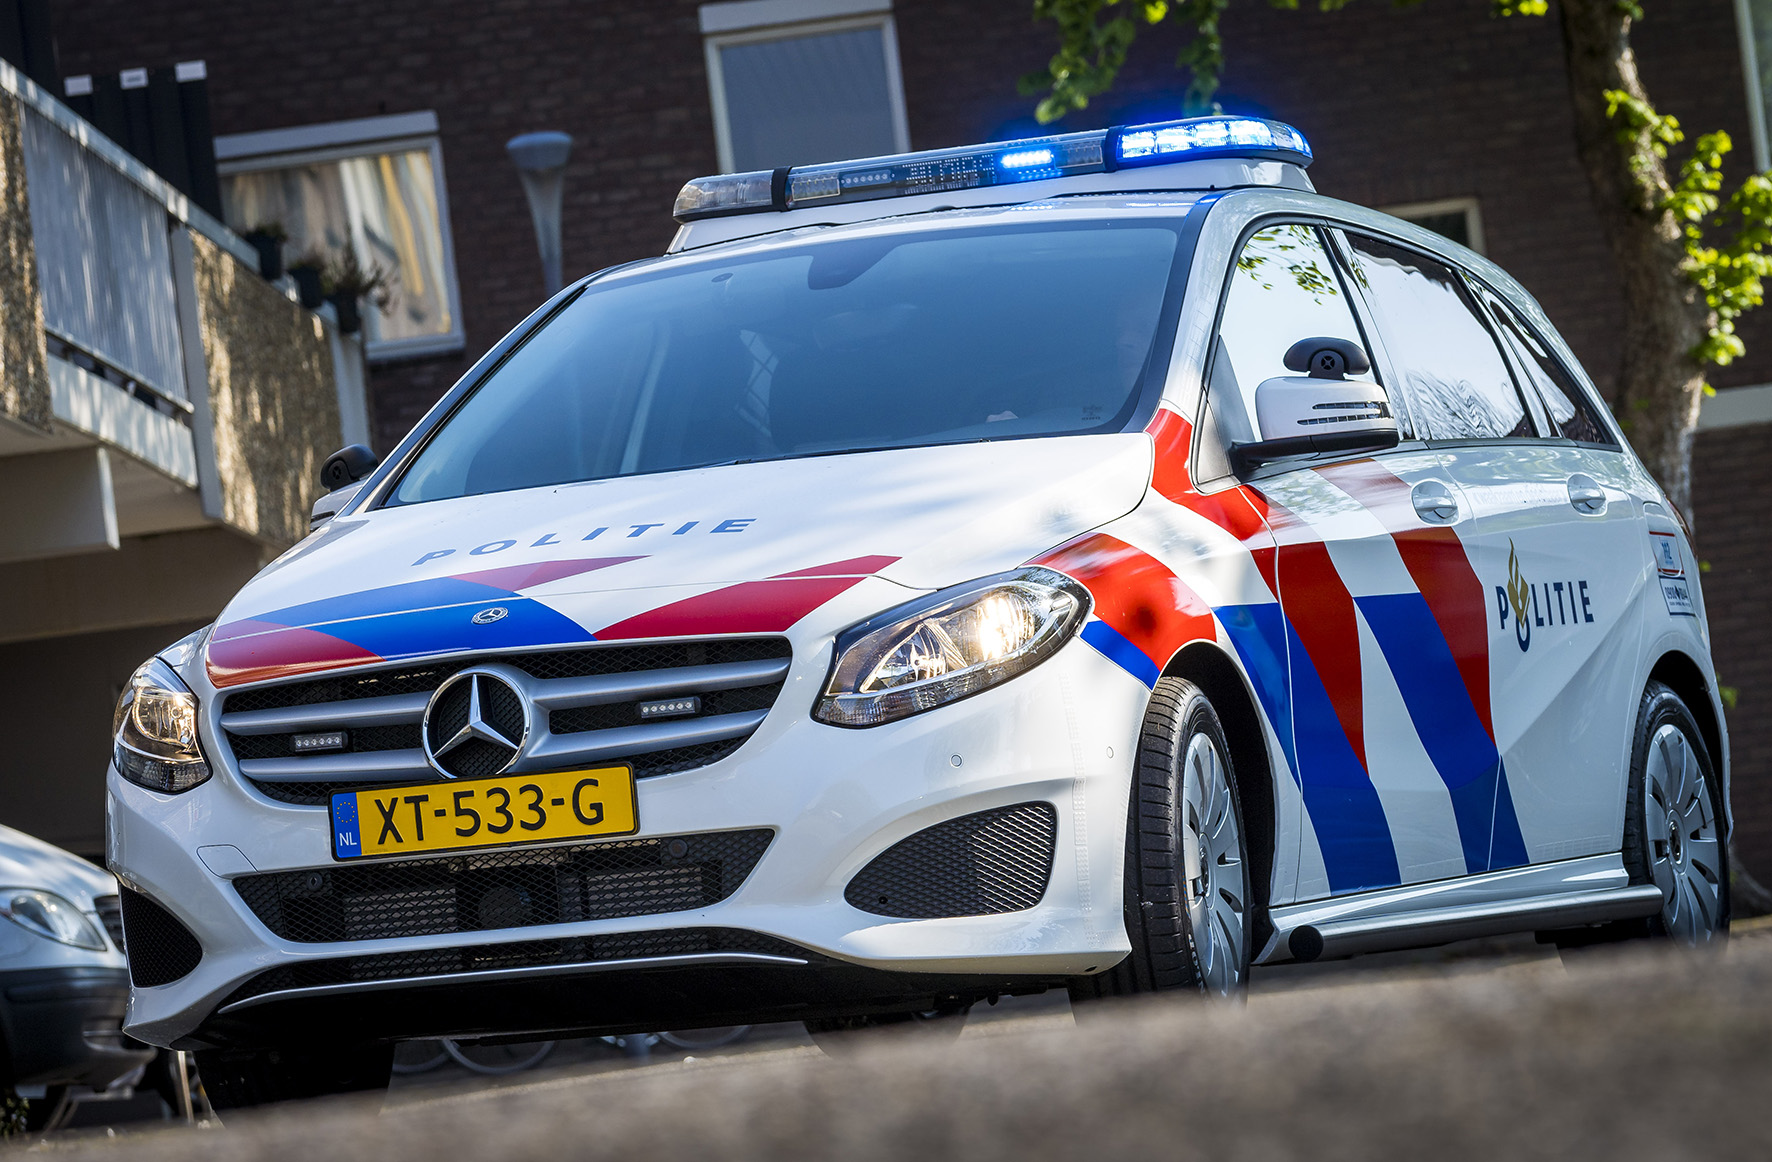 Politie met grote spoed naar de Aengwirderweg in Luinjeberd vanwege ongeval met letsel